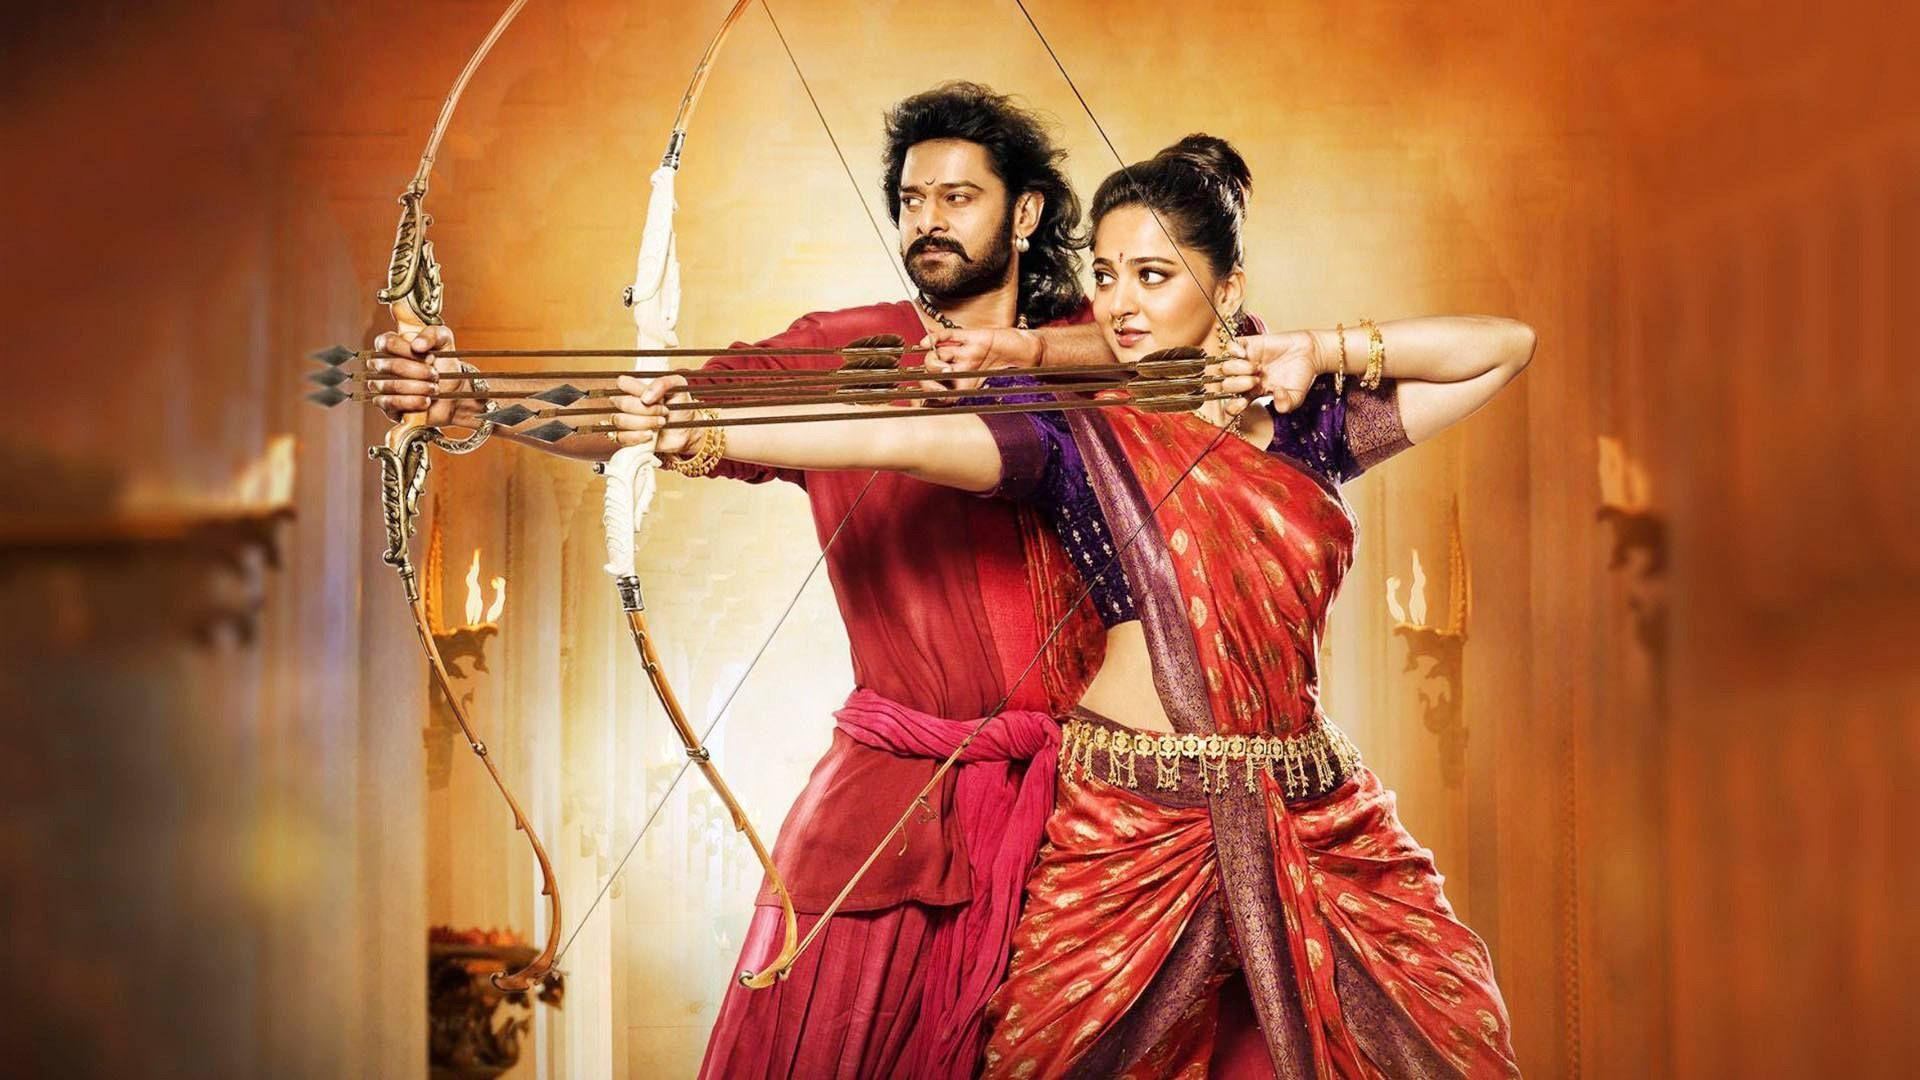 free download bahubali 1 full movie in hindi 720p